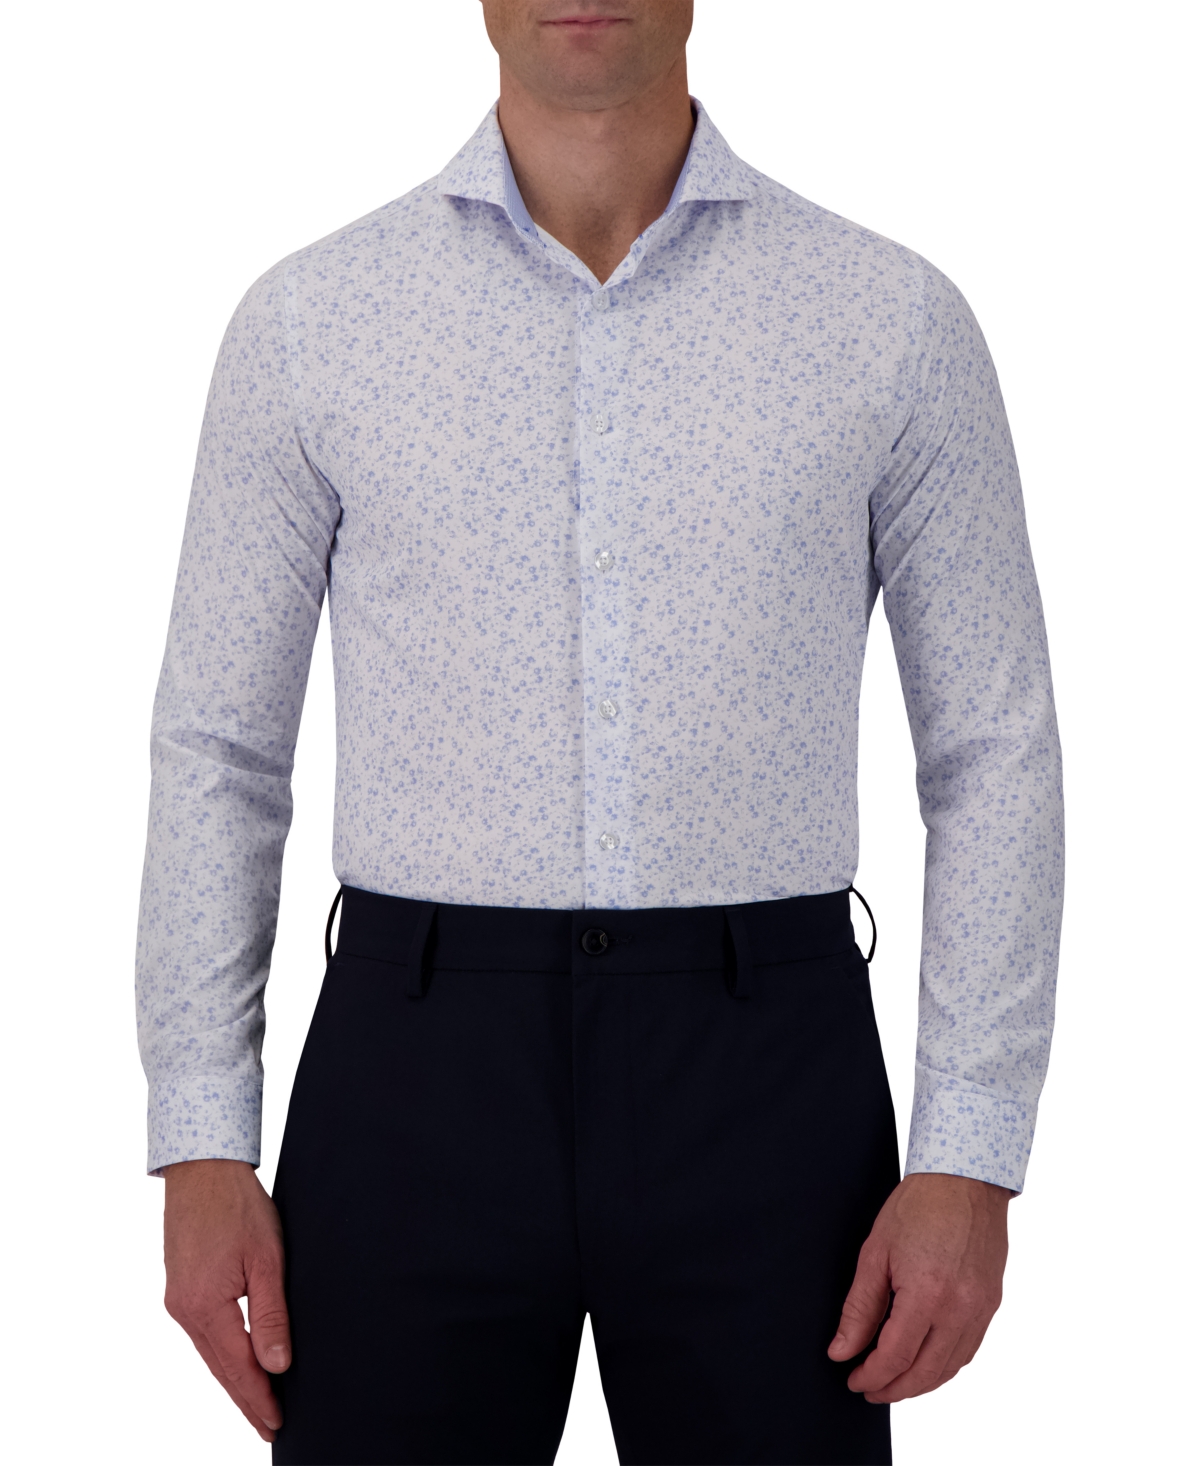 Men's Slim-Fit Floral-Print Dress Shirt - Light Blue